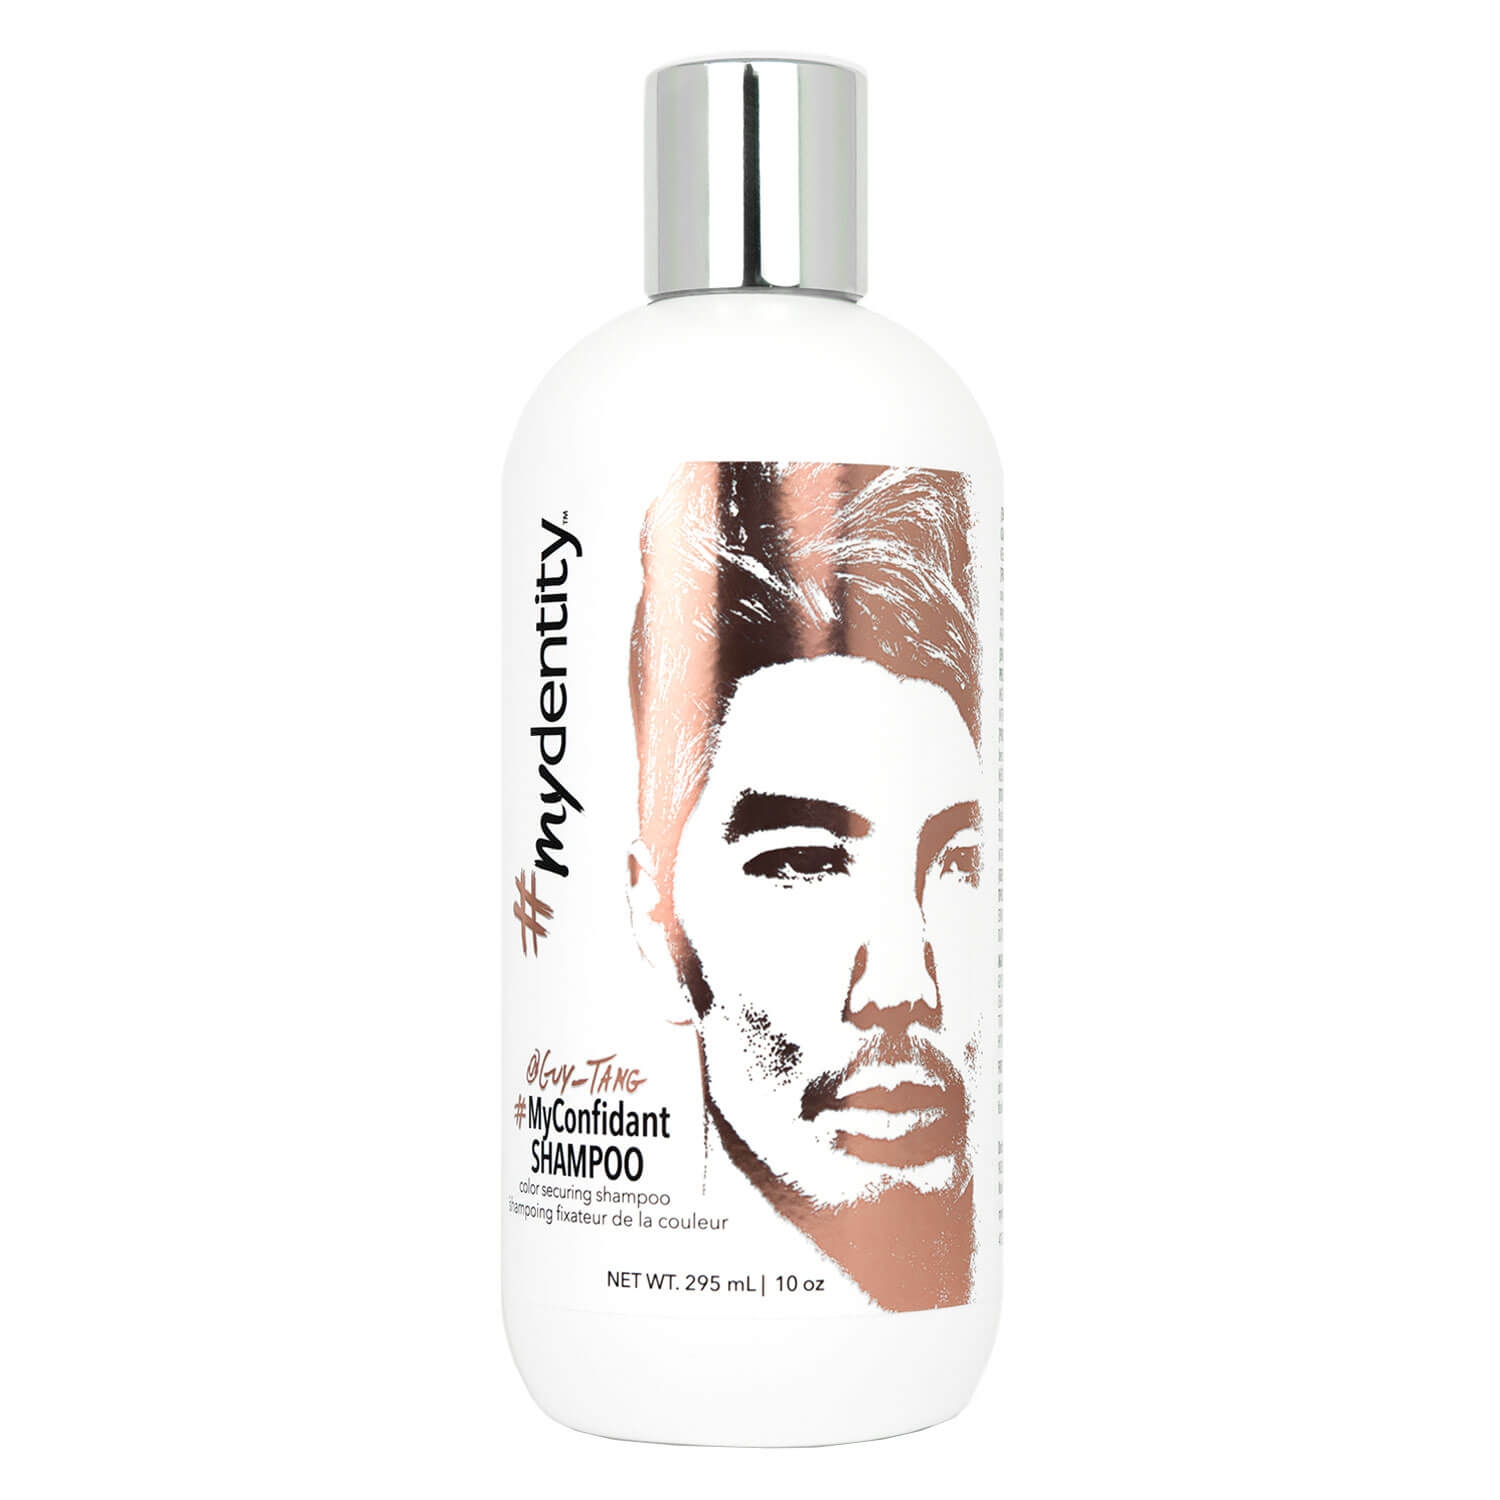 Product image from mydentity Care - #MyConfidant Shampoo